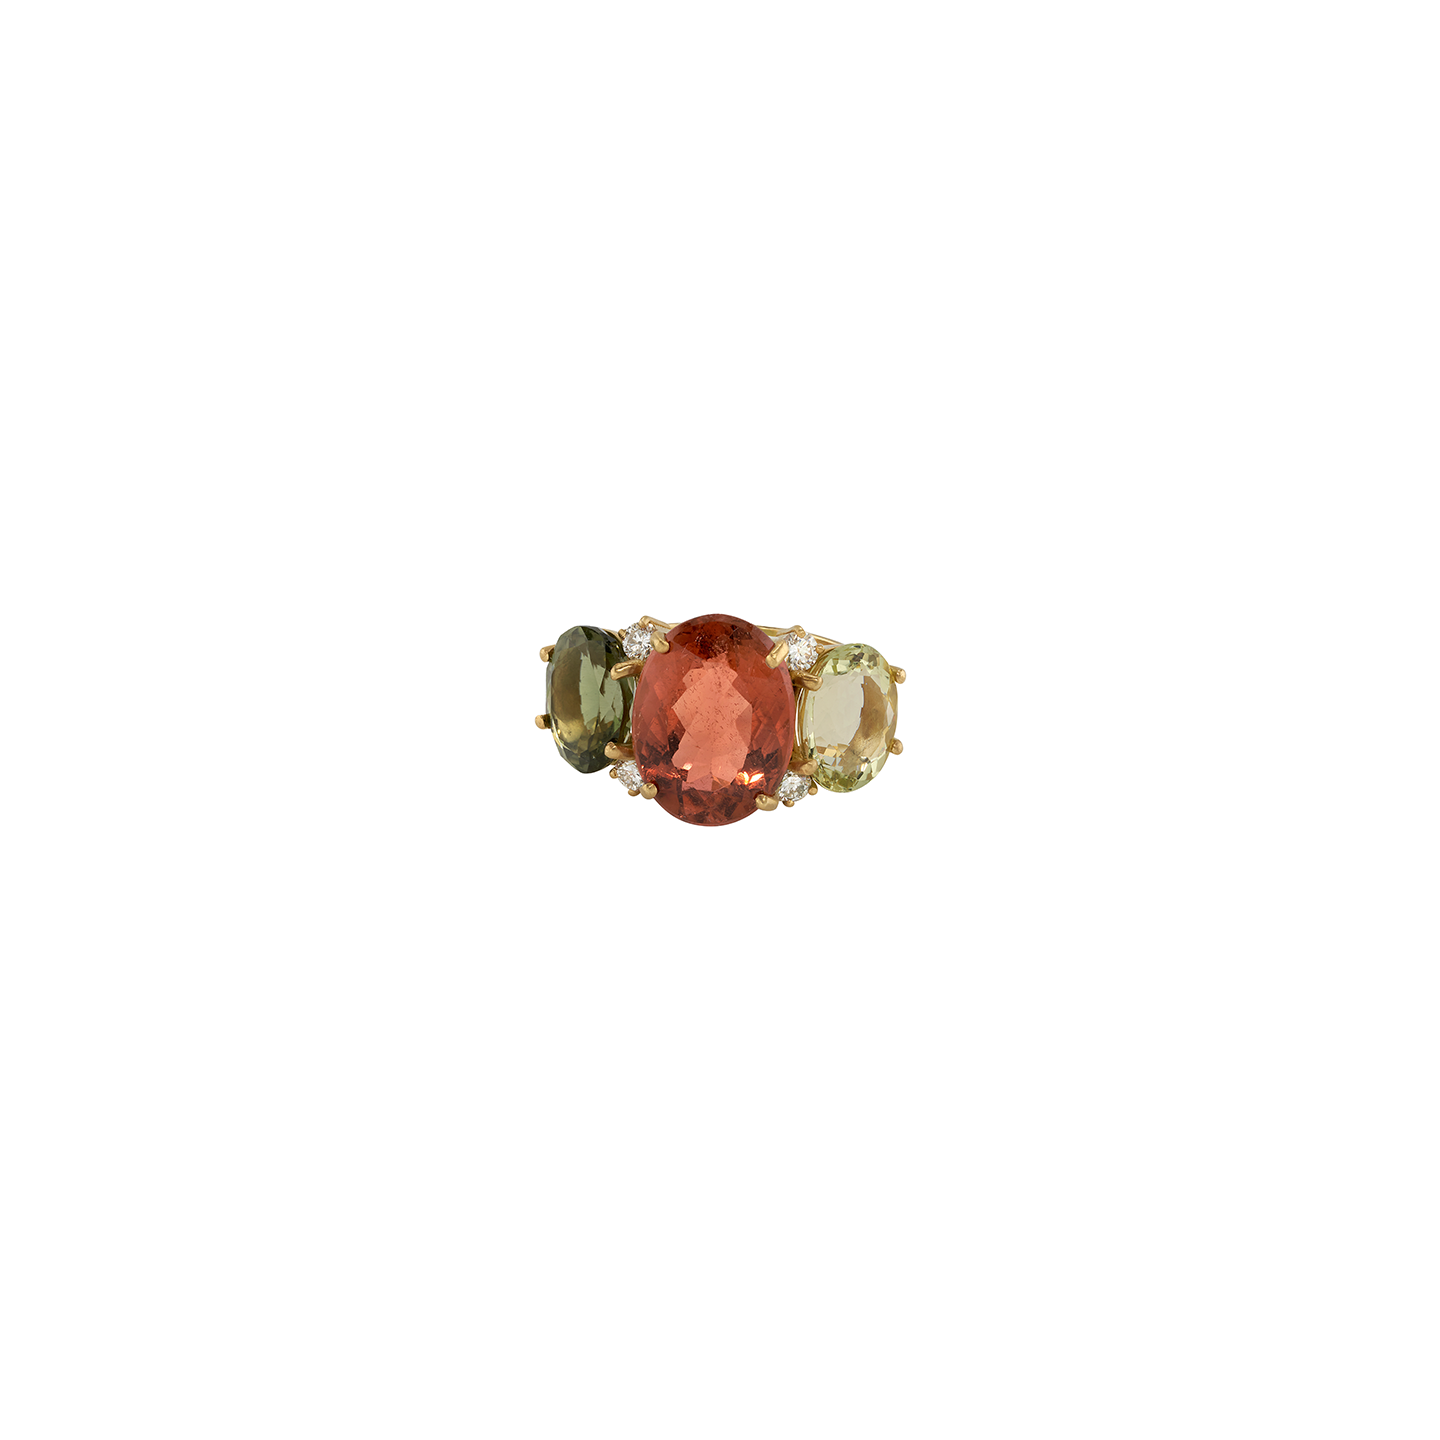 Irene Neuwirth 'Gemmy Gem' One-of-a-Kind Three Stone Tourmaline Ring